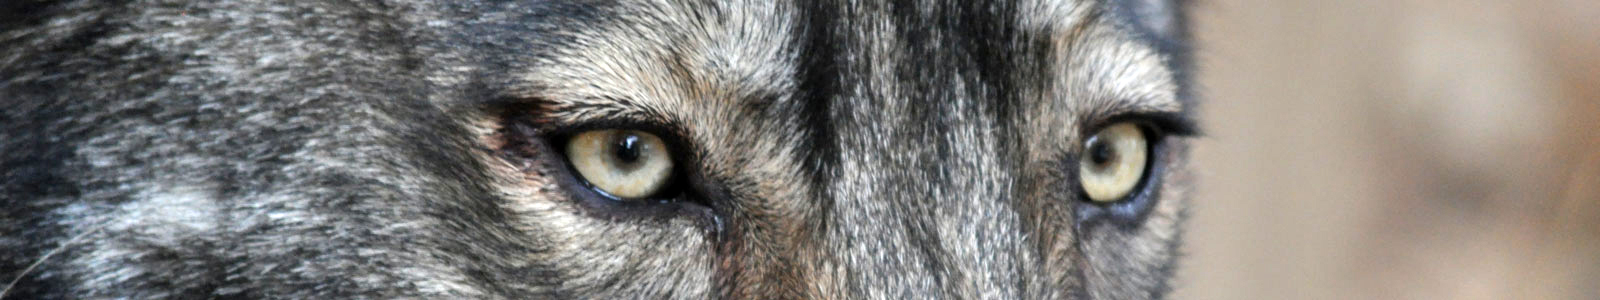 Texas Wolfdog Project Austin Brisco Header Image